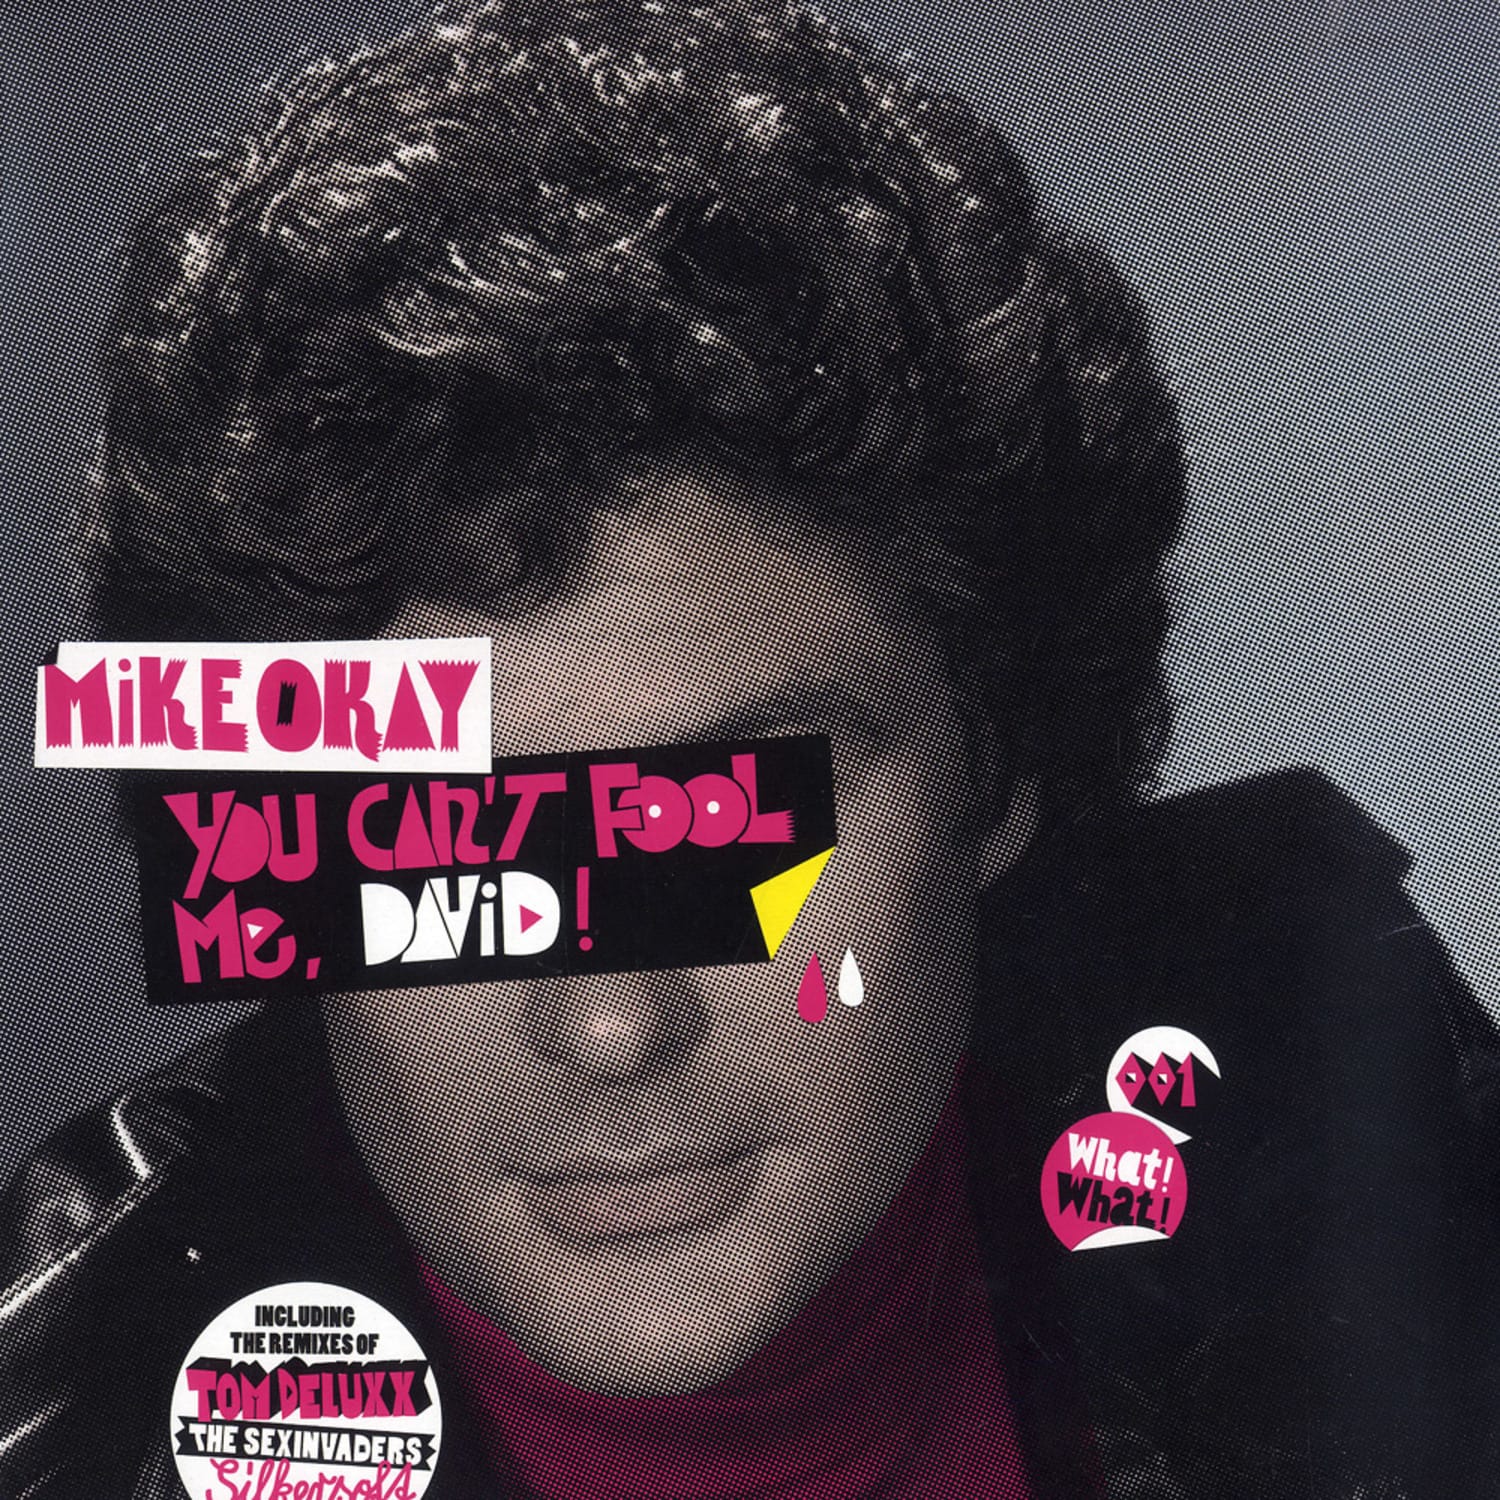 Mike Okay - YOU CANT FOOL ME DAVID